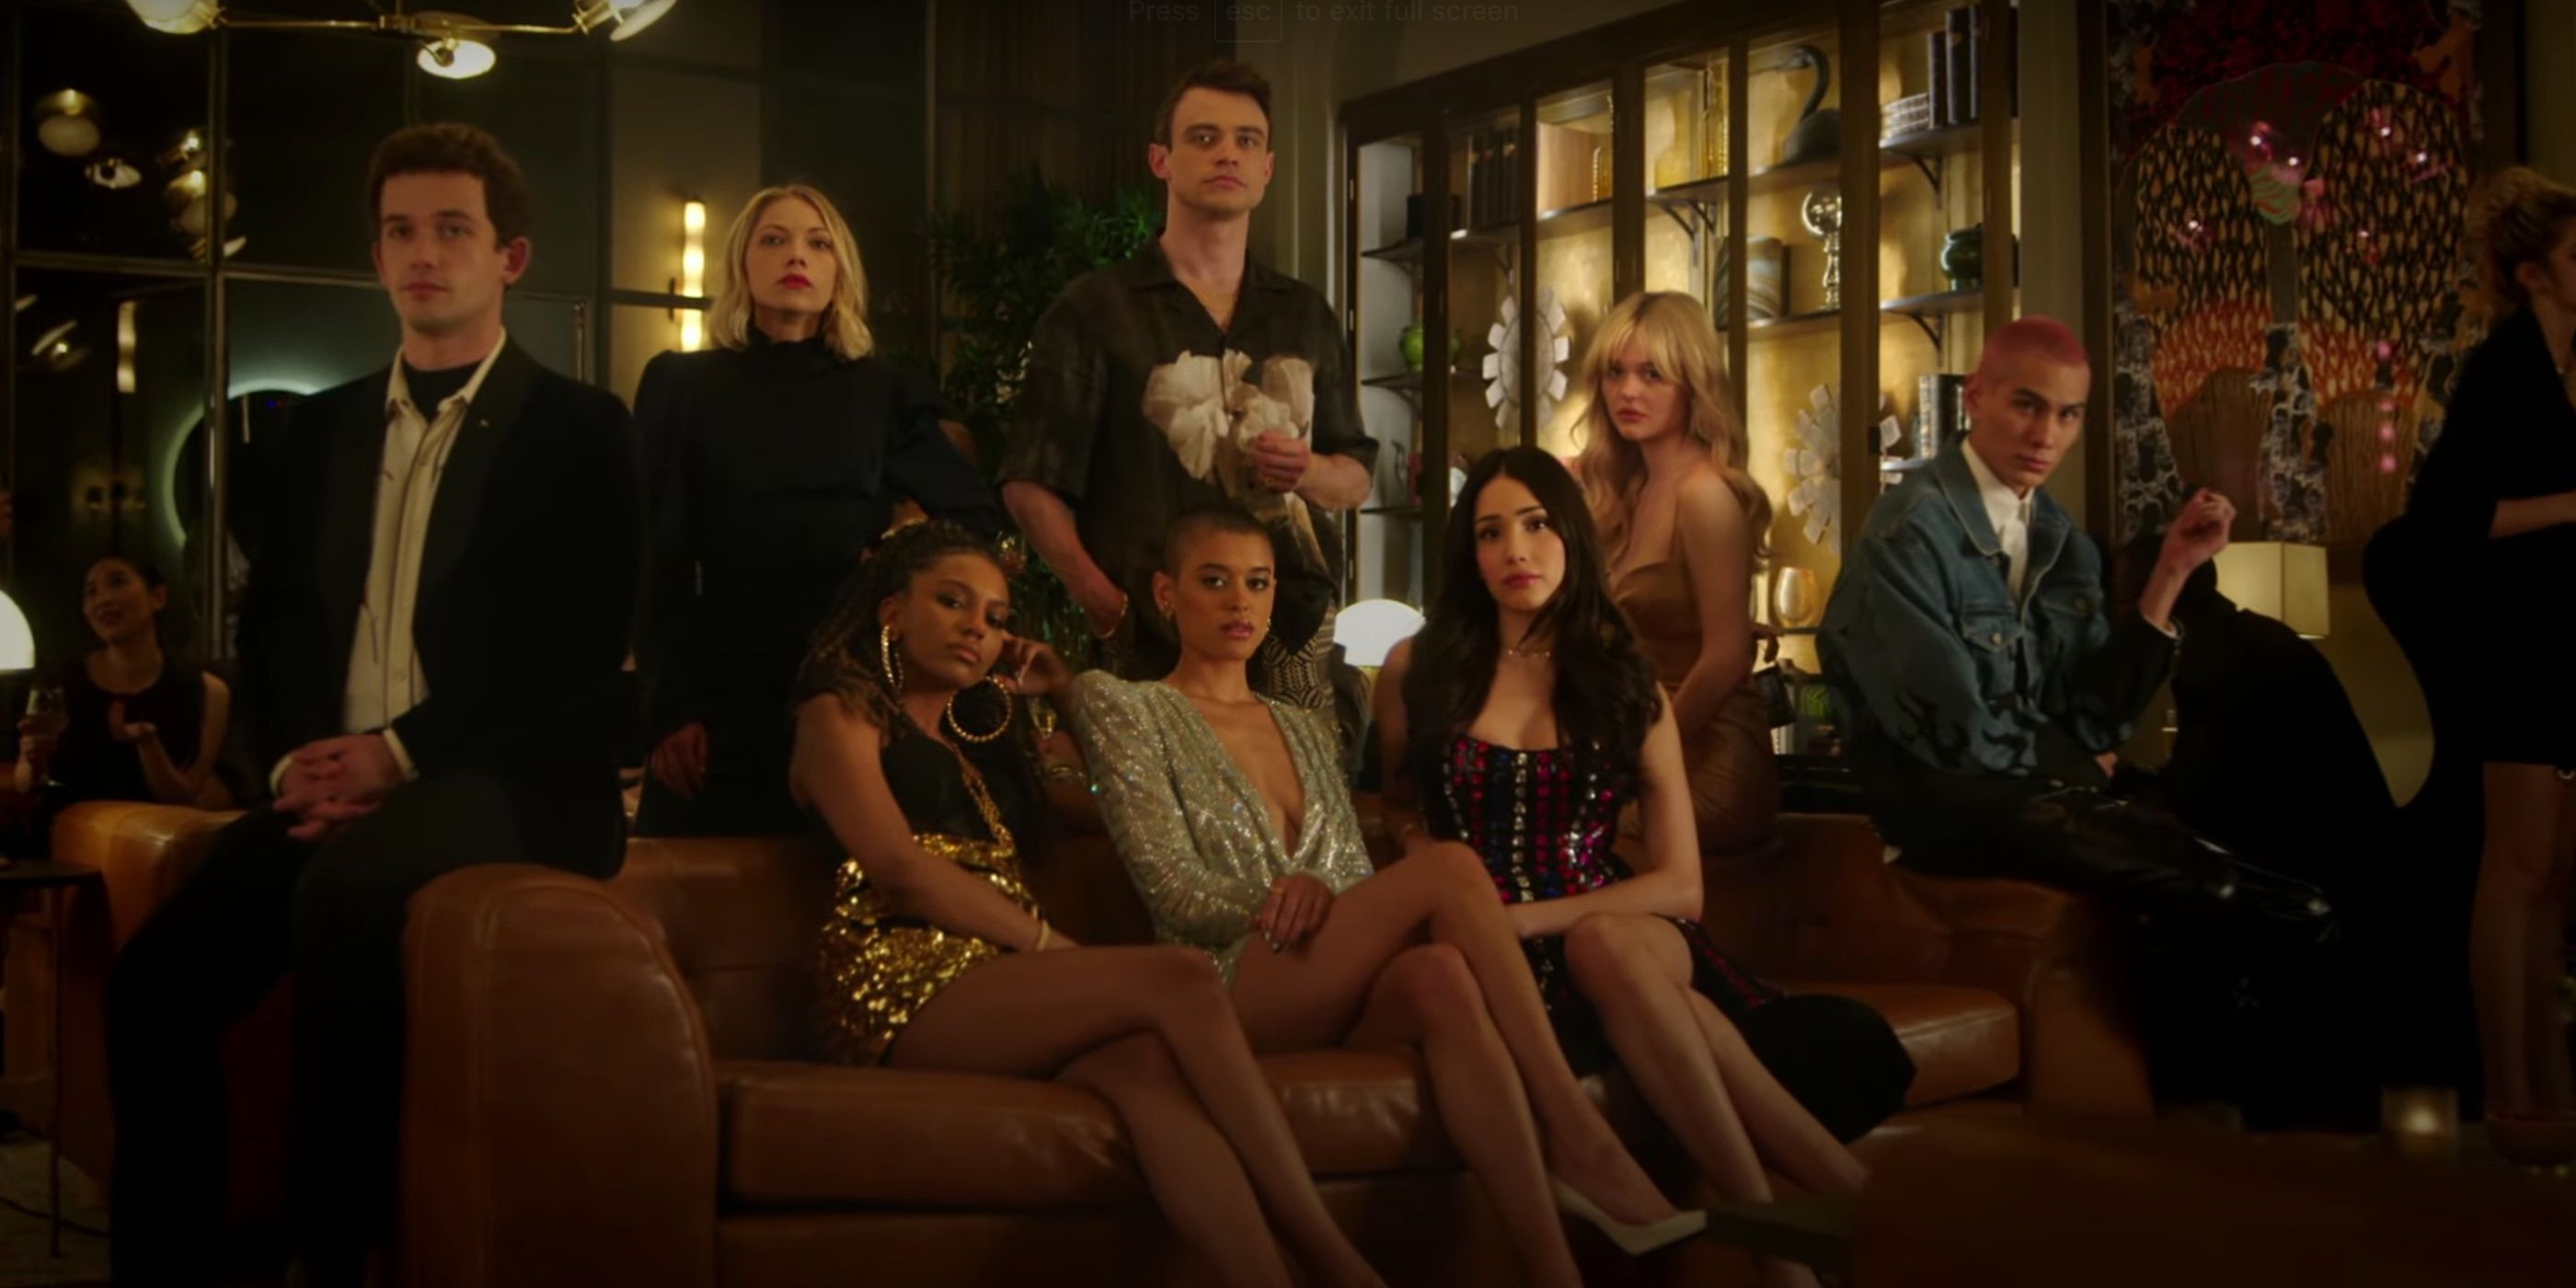 Gossip Girl Trailer Teases an Edgier, Sexier Reboot on HBO Max